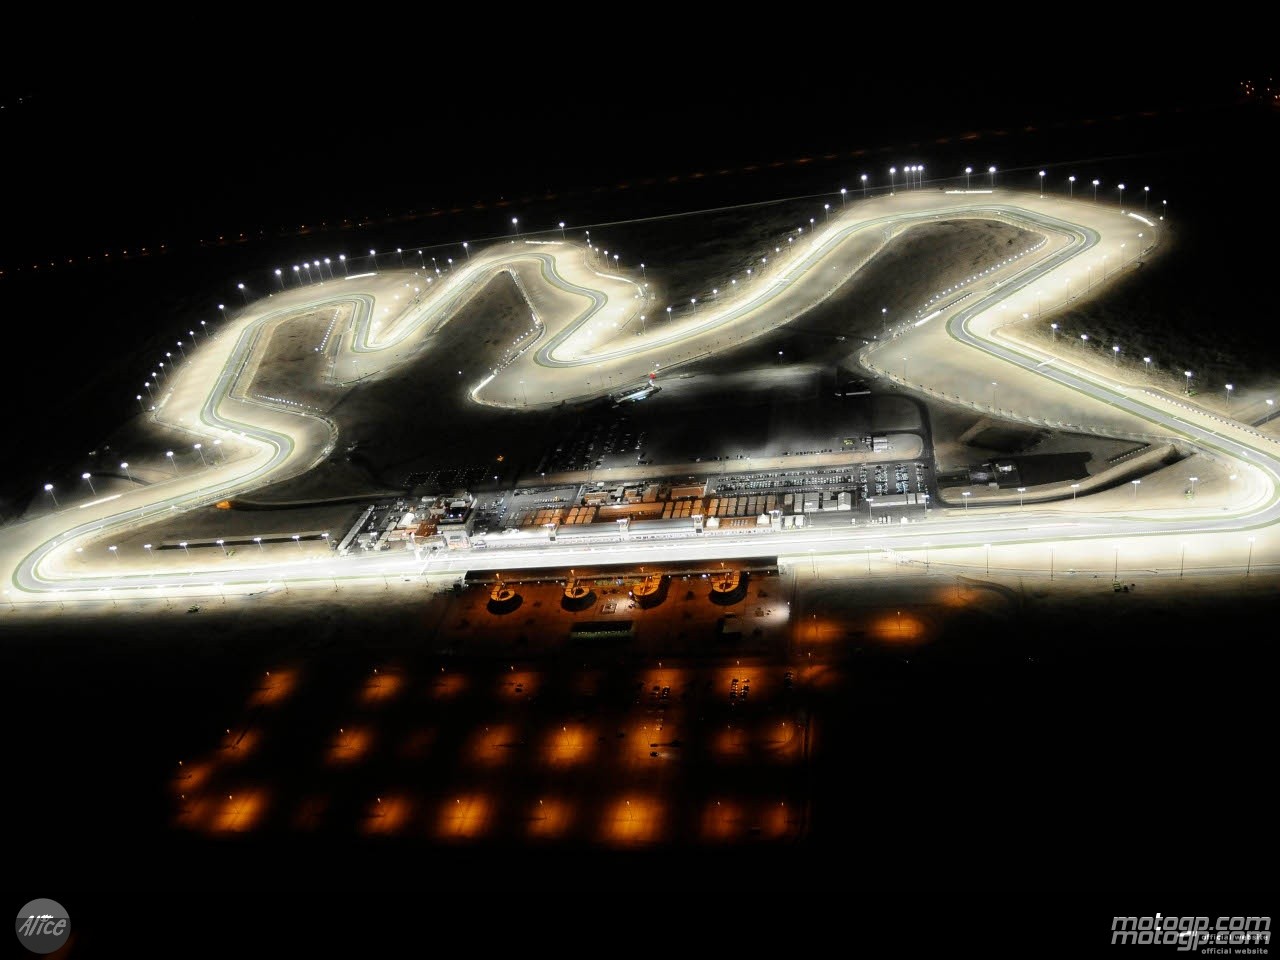 Hasil Motogp Qatar 2013 ~ gerobak tanah tua